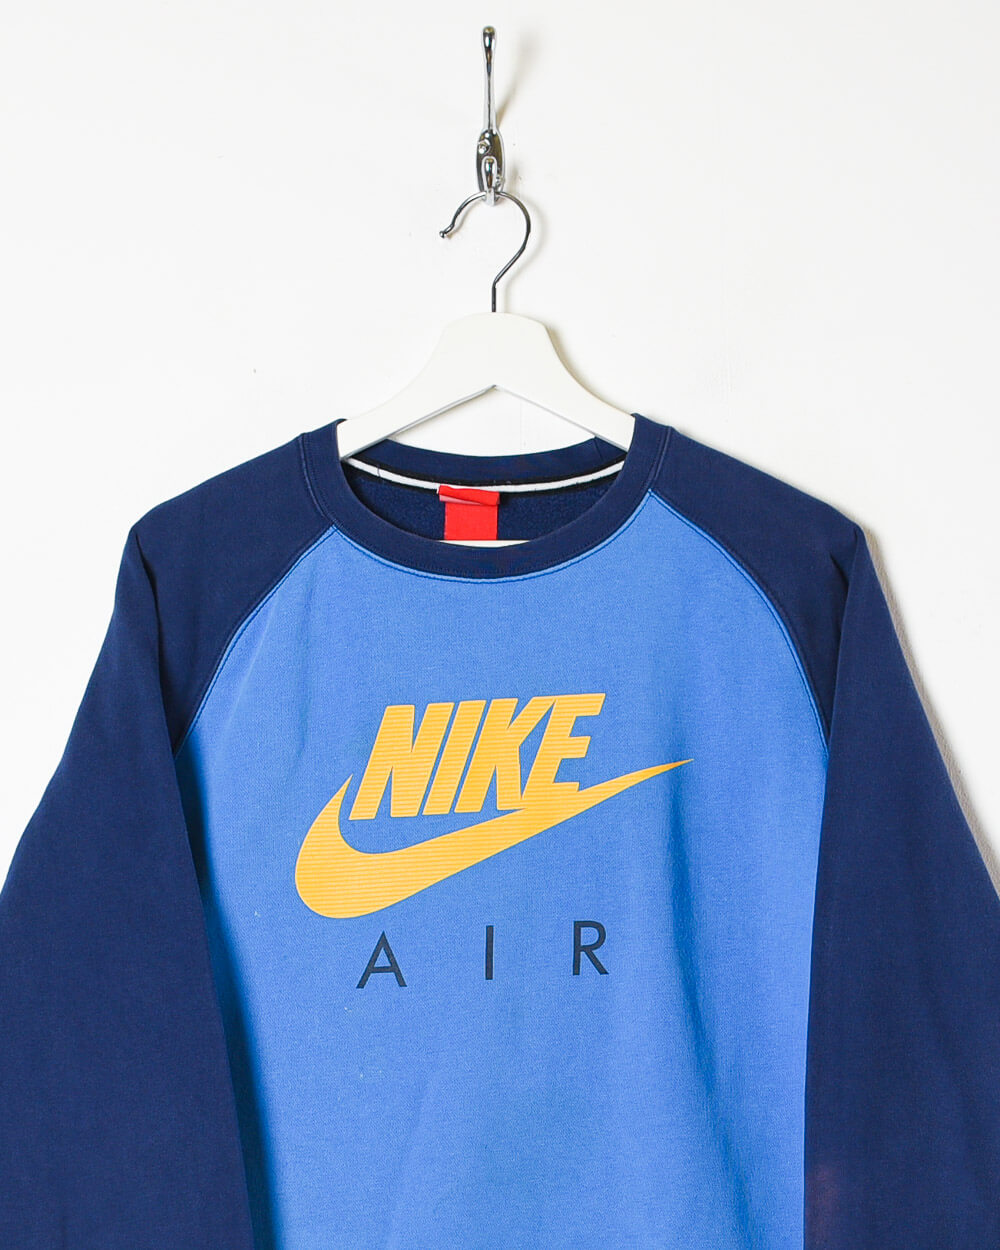 Blue Nike Air Sweatshirt - Small